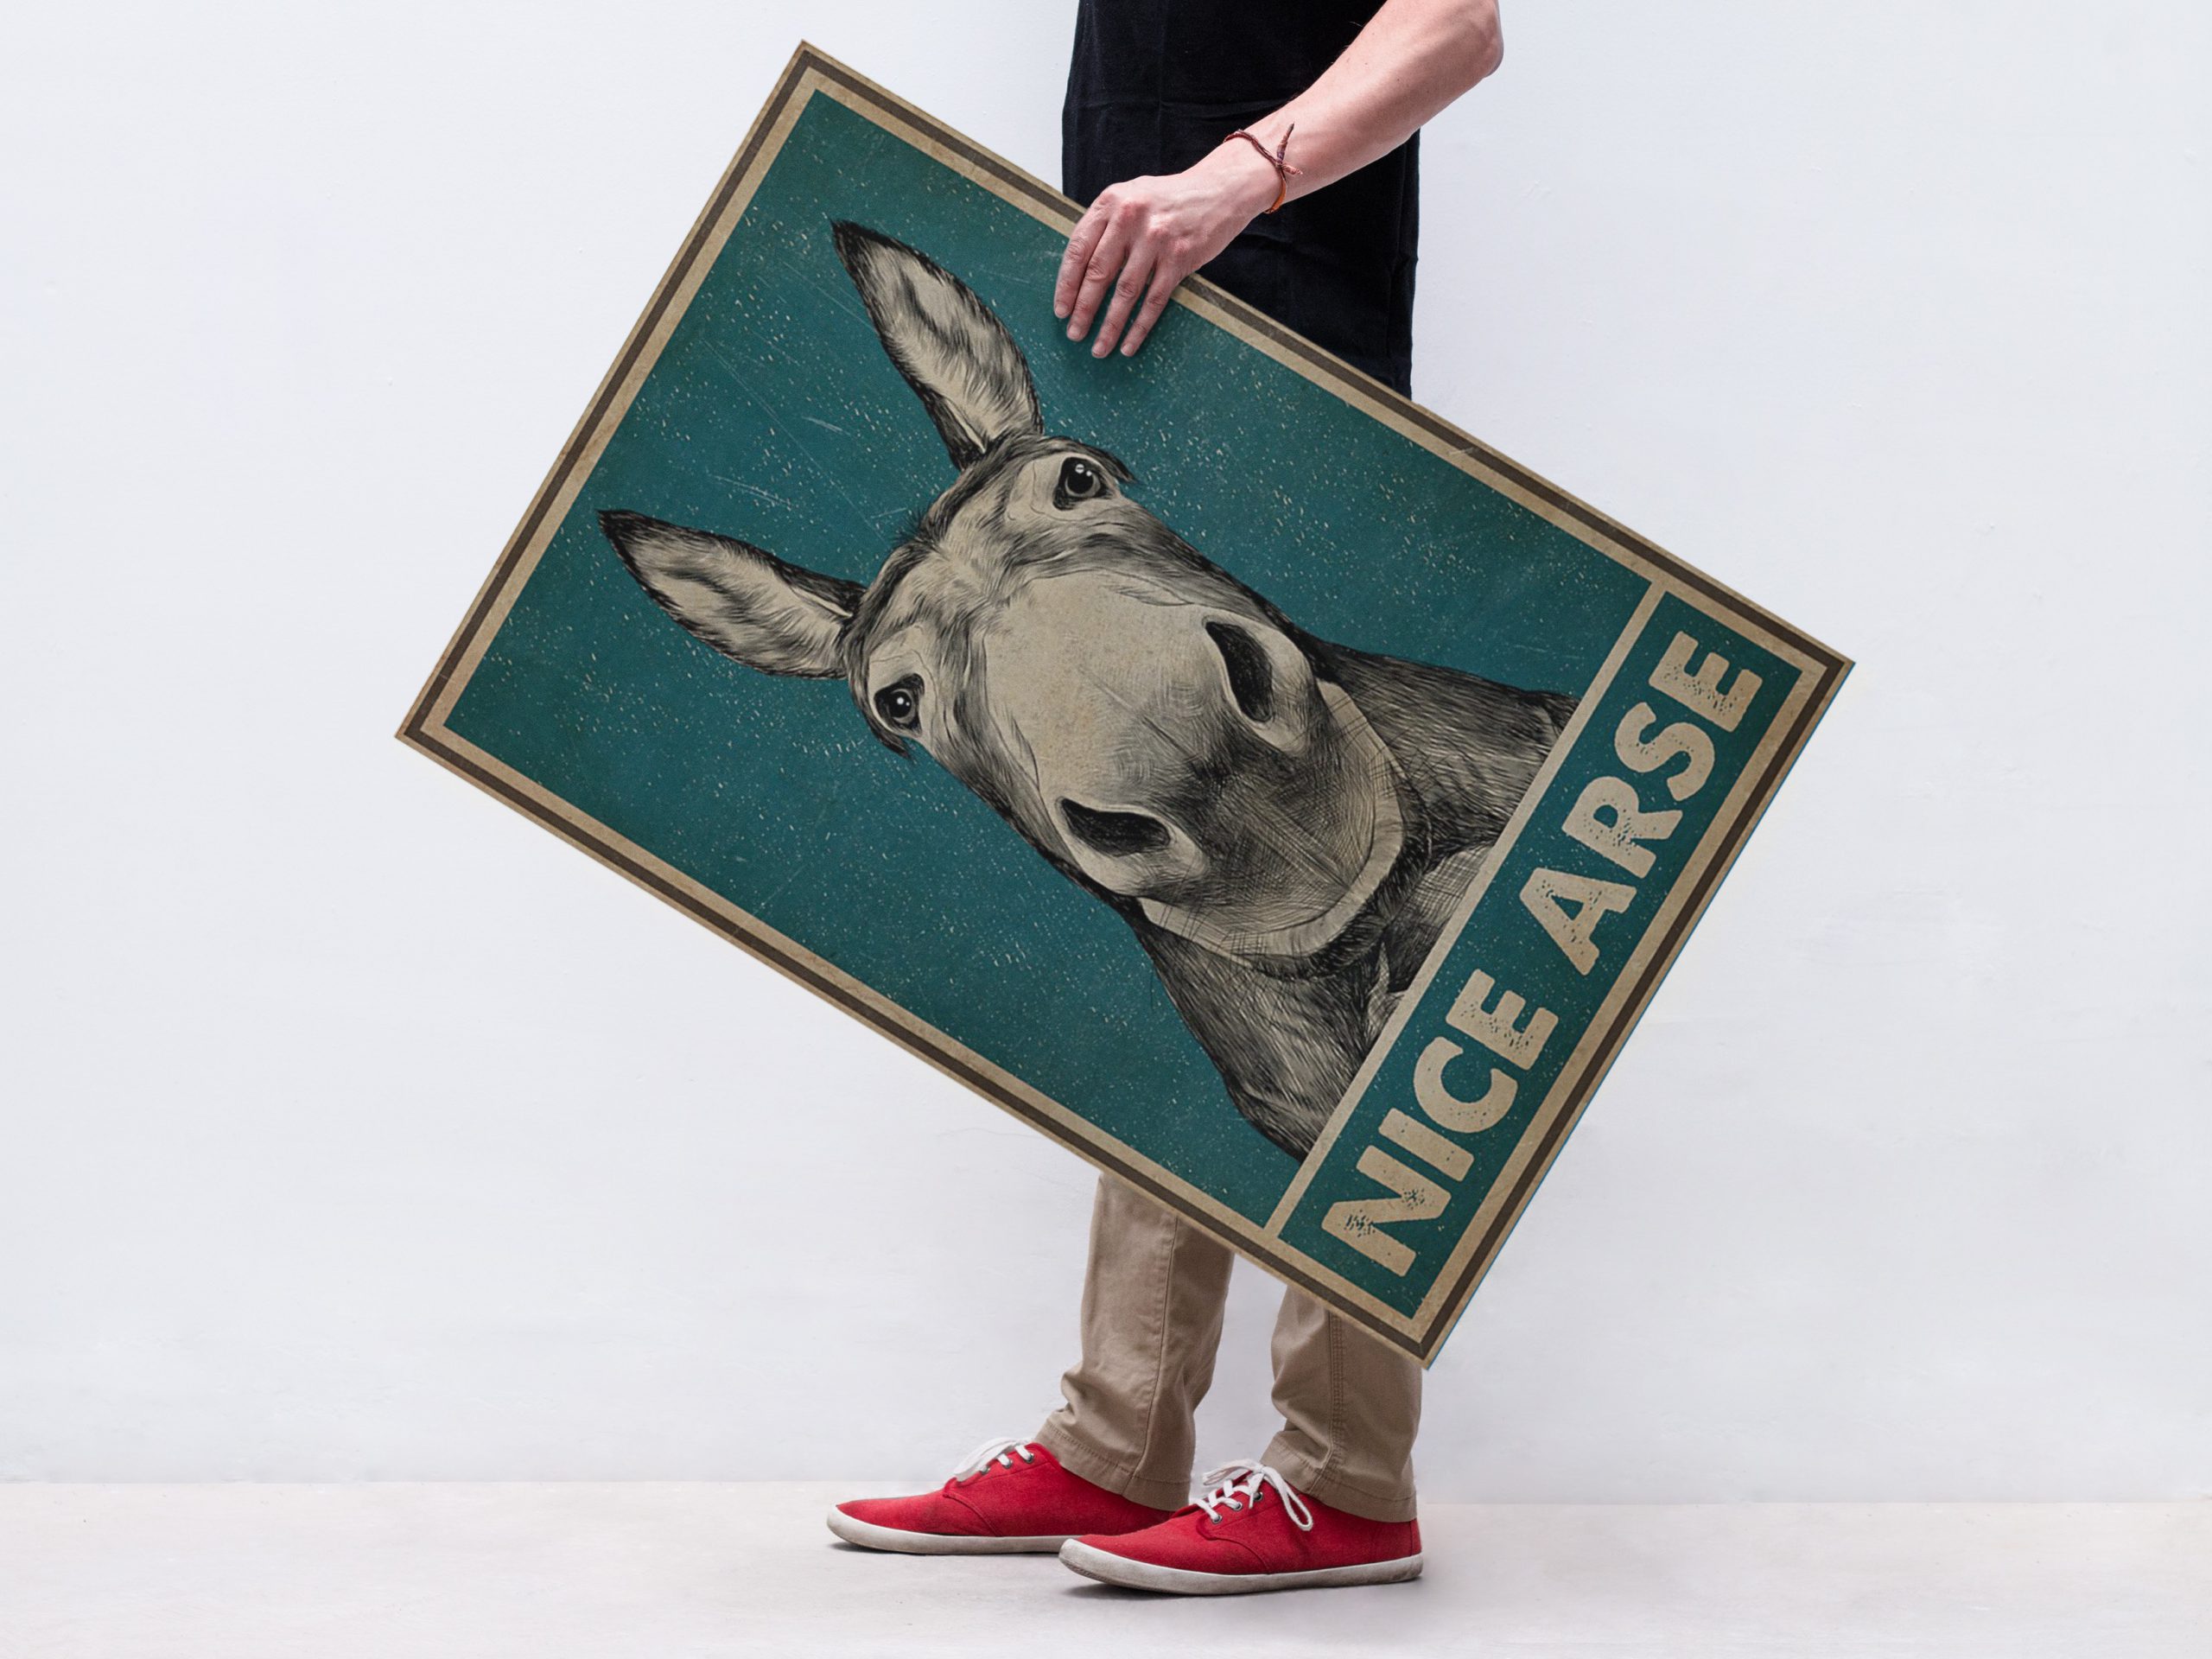 Donkey nice arse poster 1